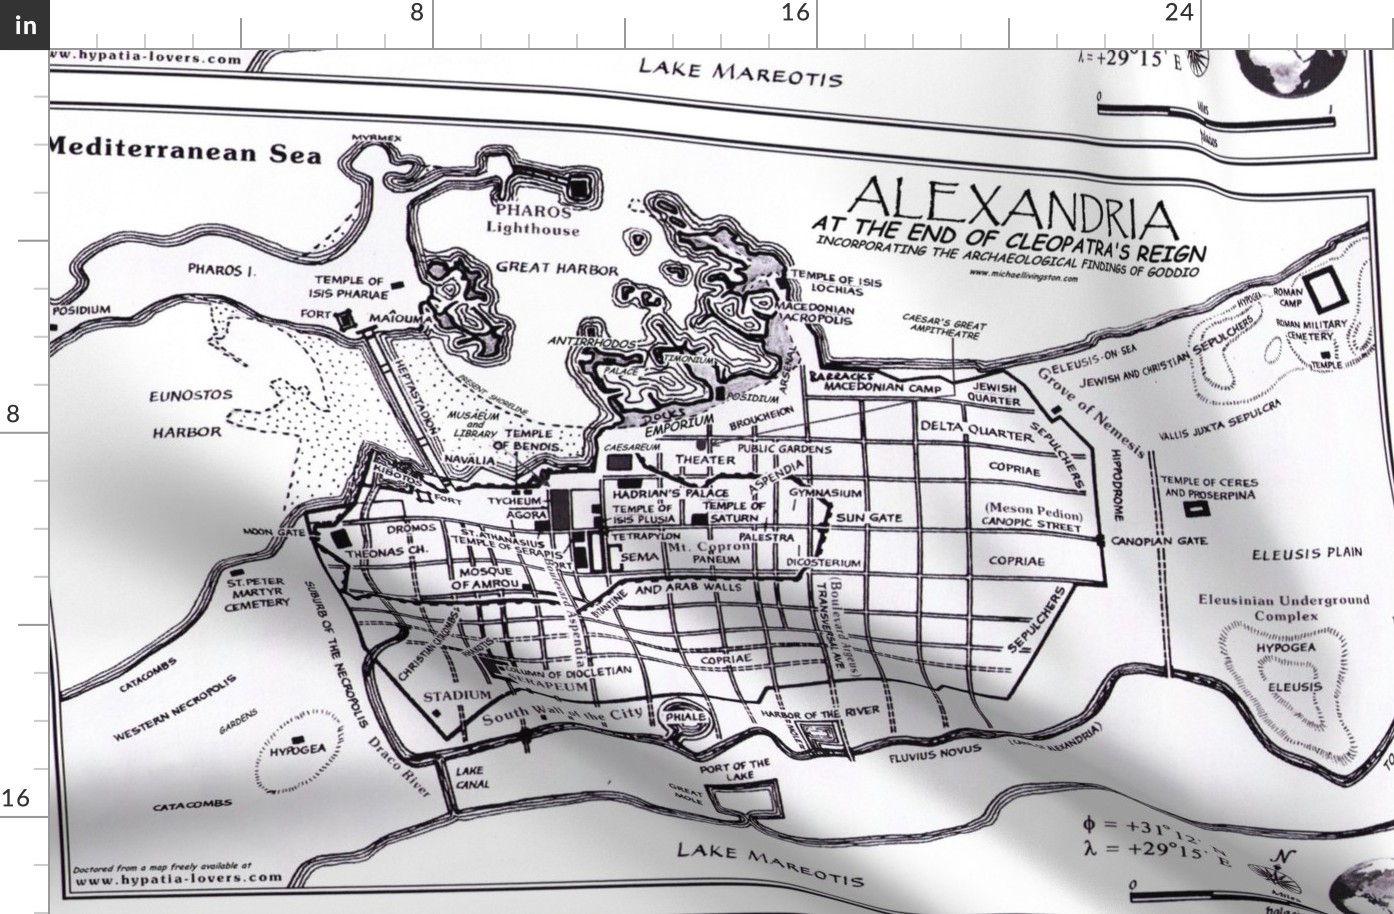 Ancient Alexandria (28"W)